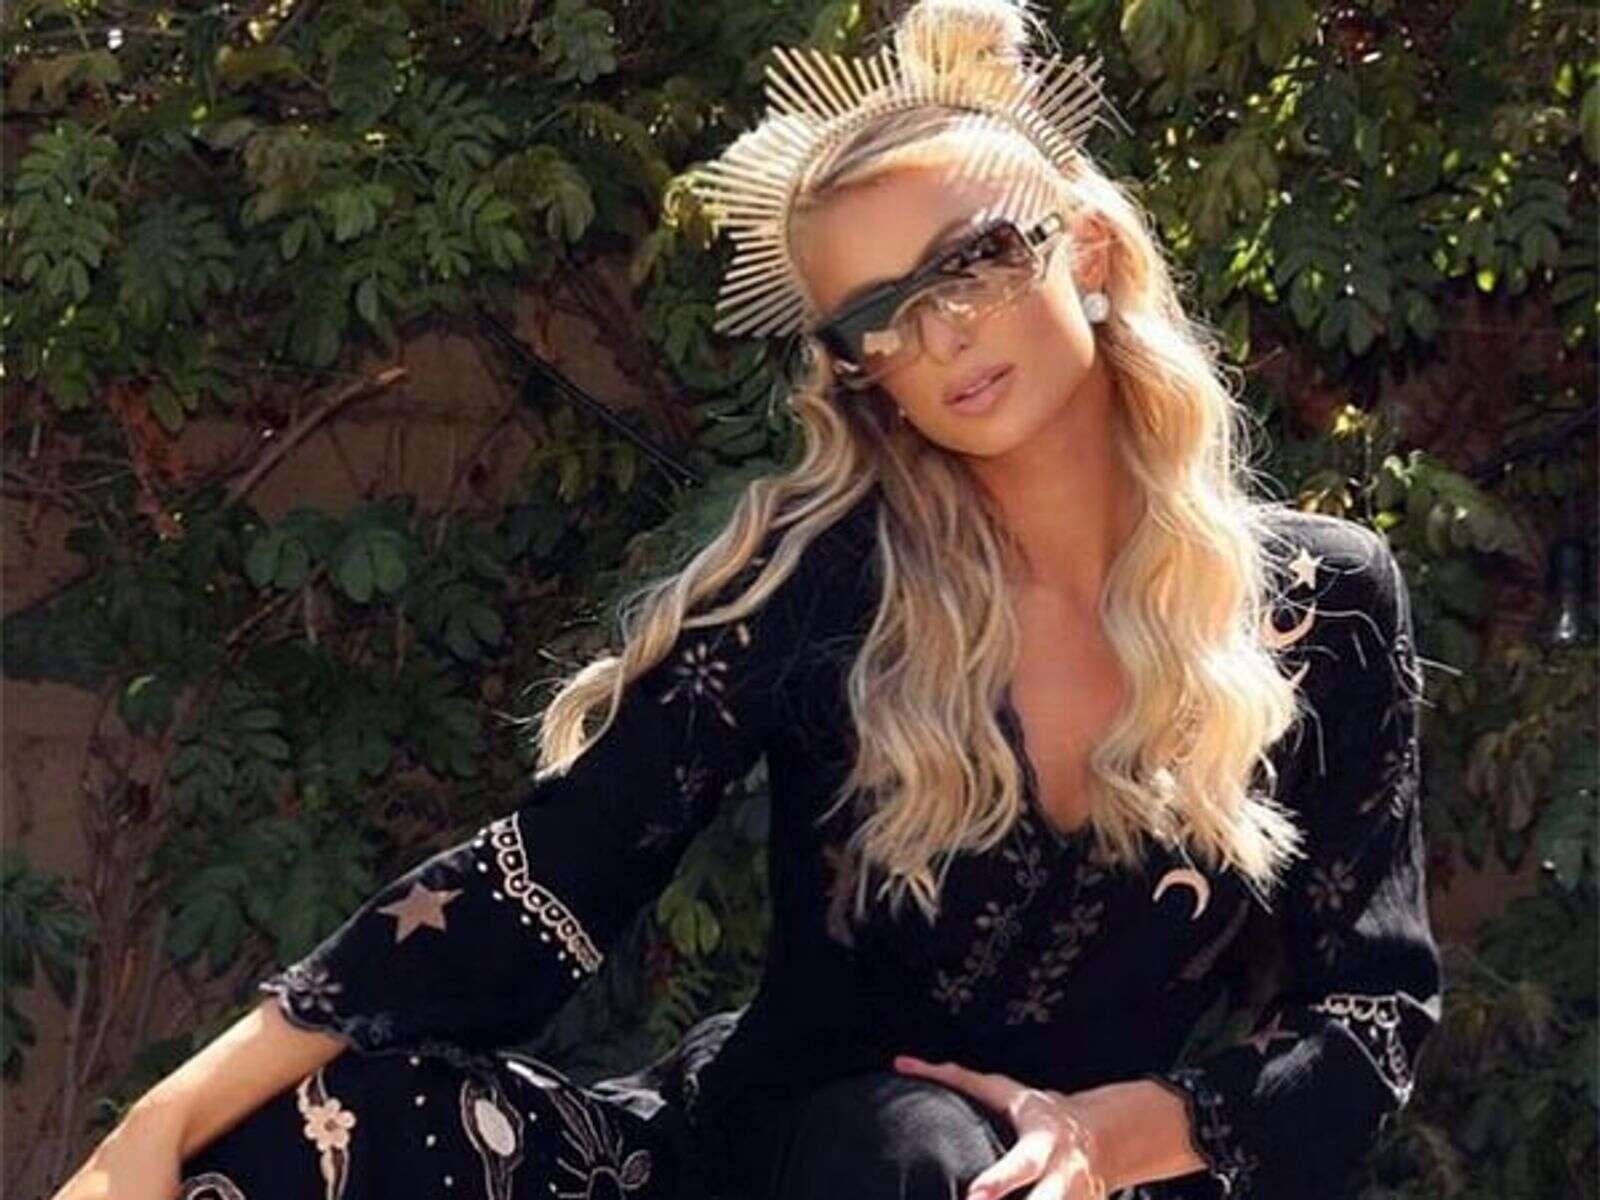 Paris Hilton on attending Coachella since her teens